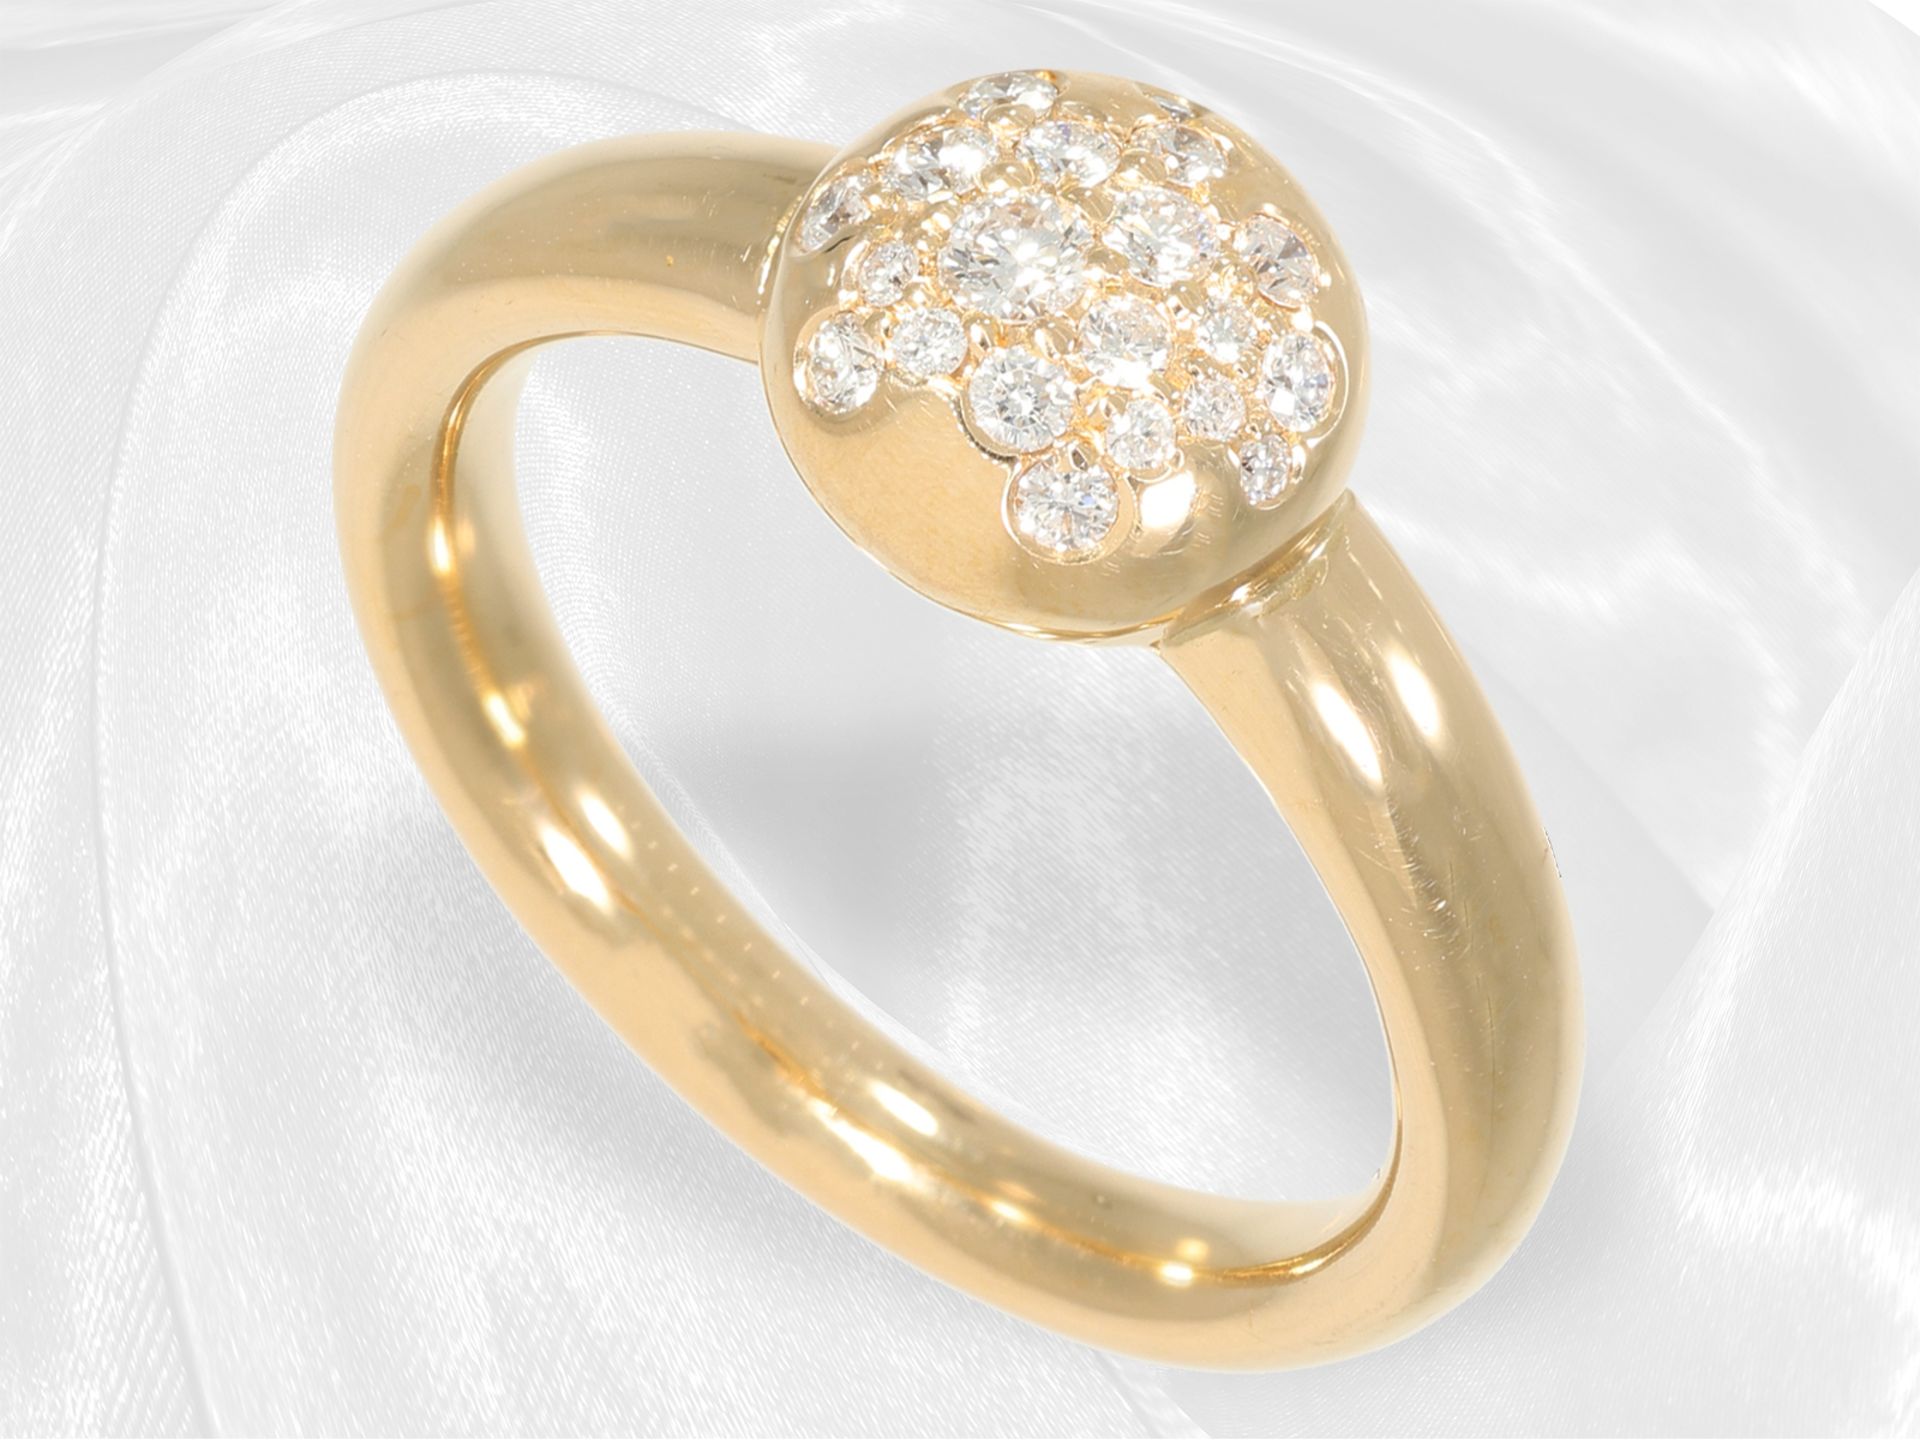 Unworn designer brilliant-cut diamond goldsmith ring by Cervera, model "Button", 18K pink gold